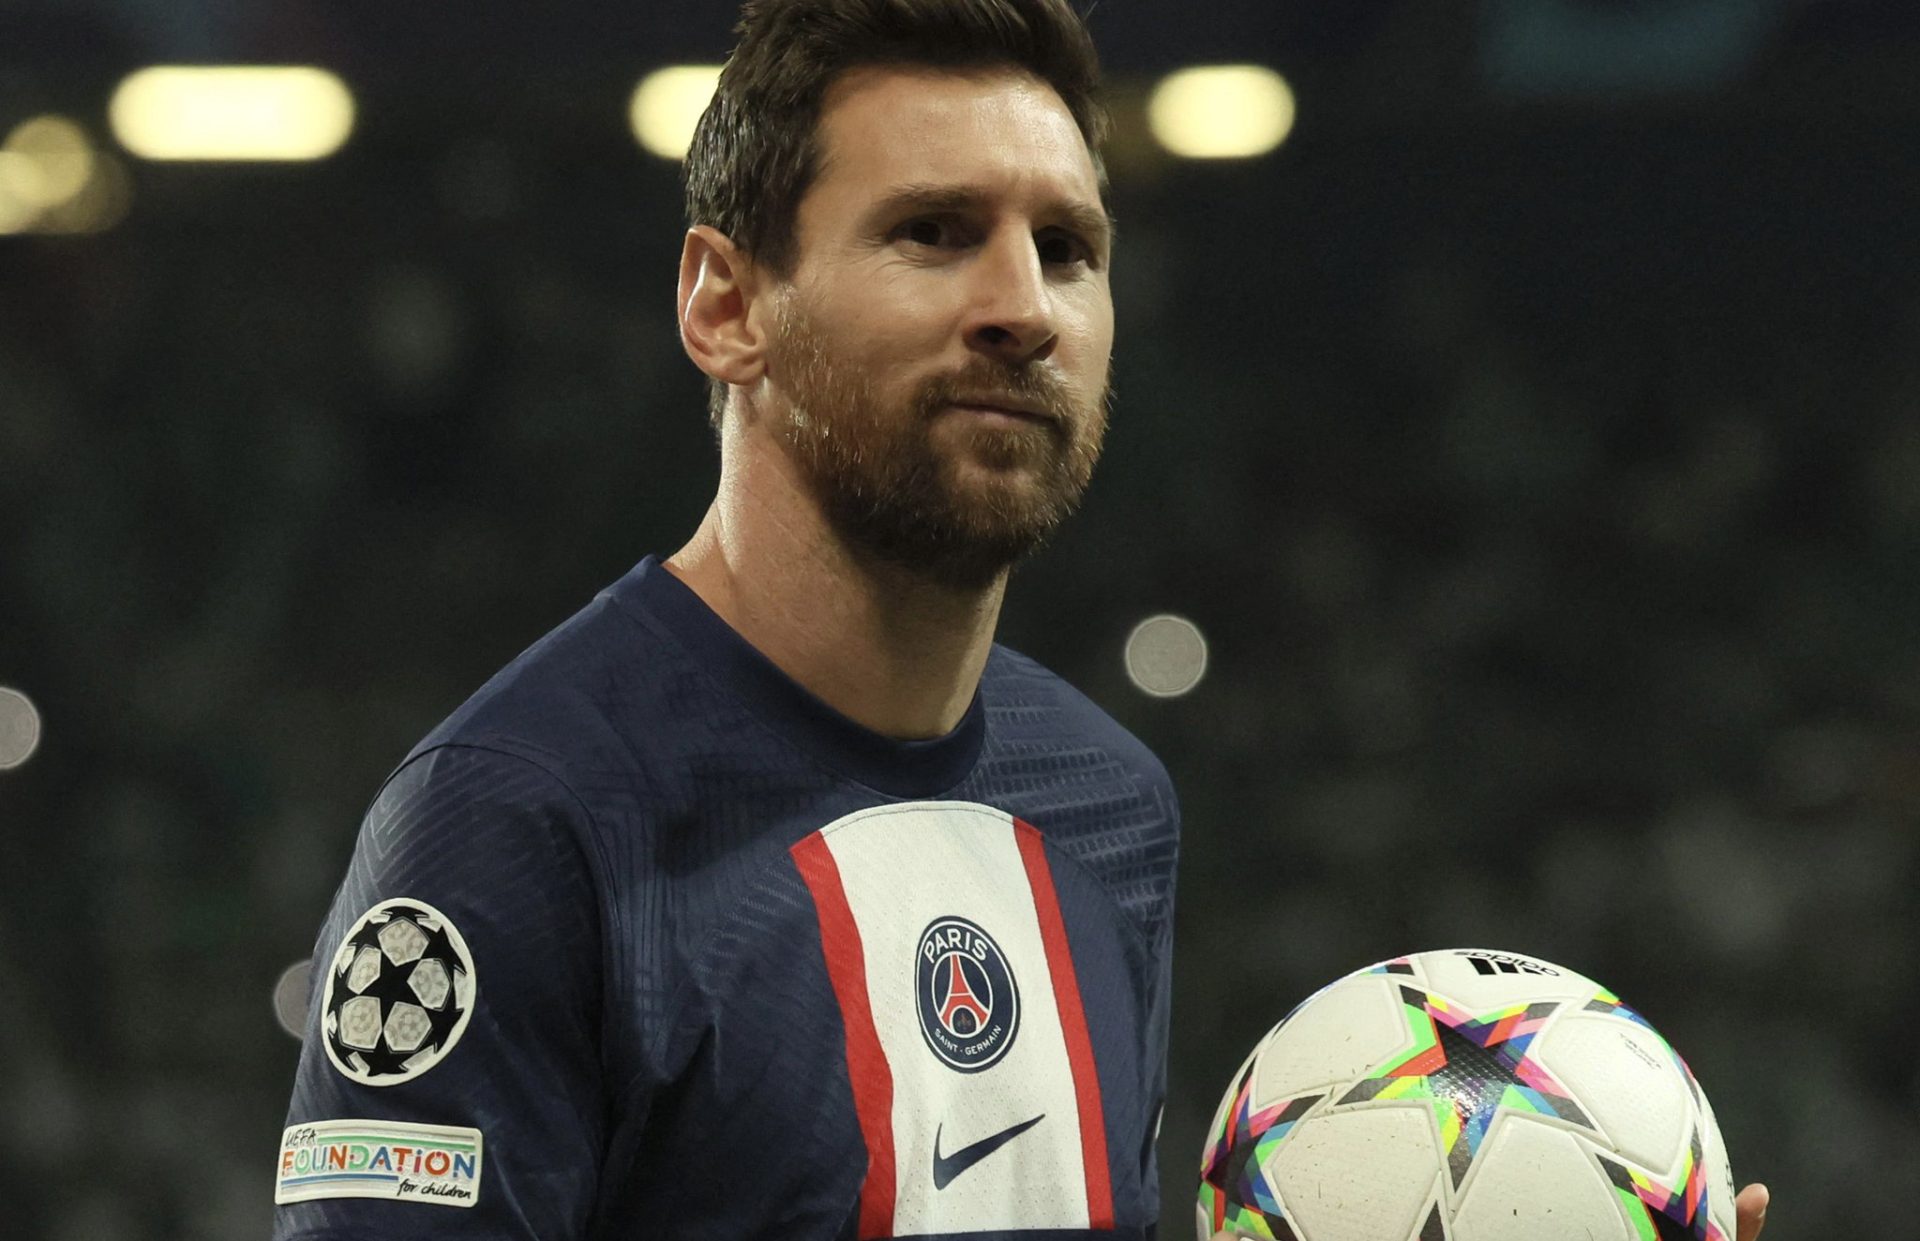 Messi estableció dos nuevos récords en la Champions League